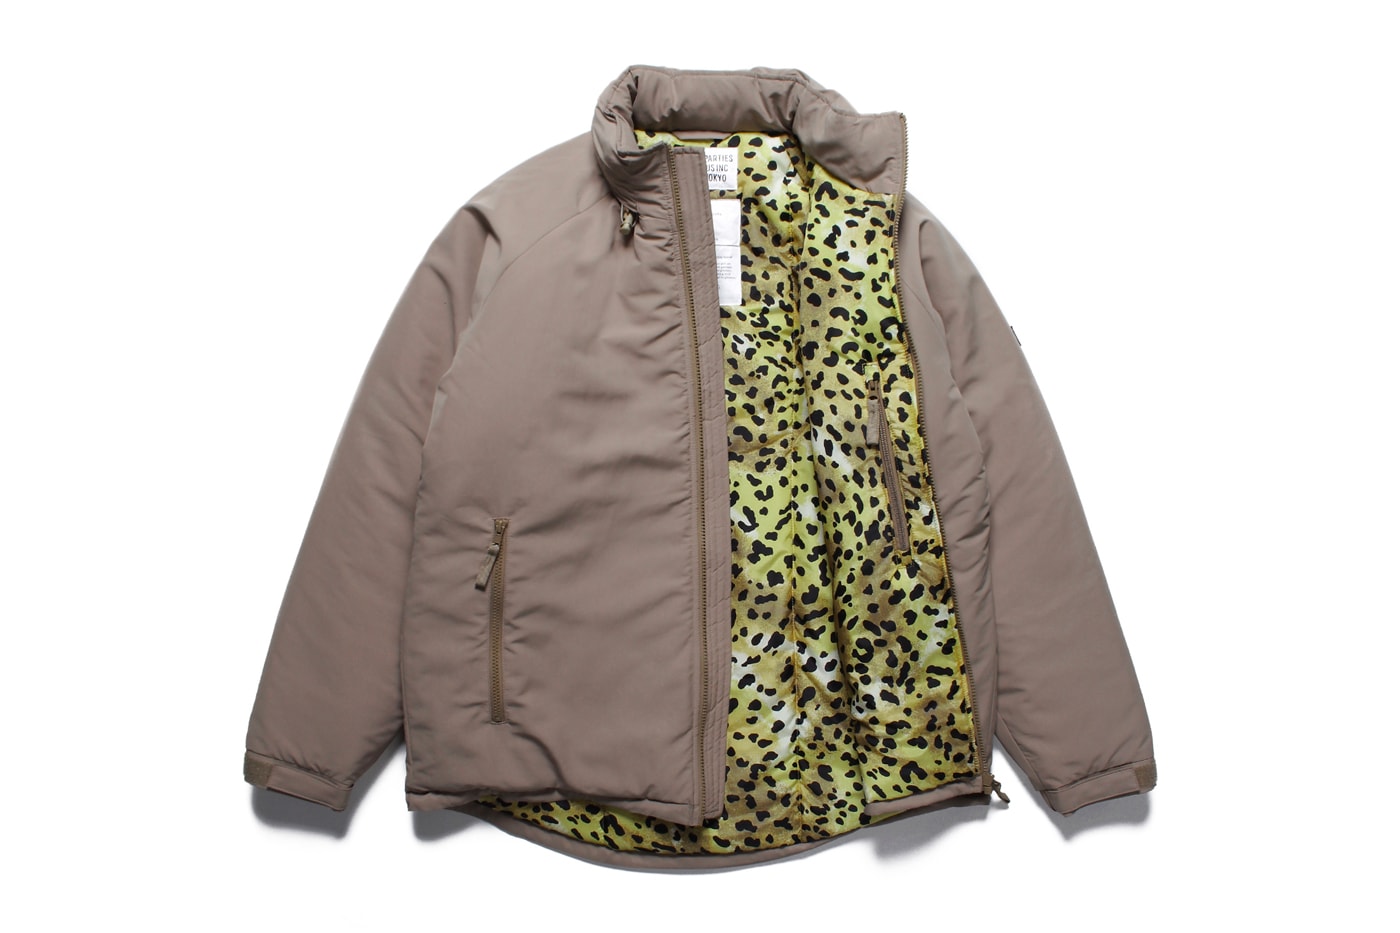 Wild Things Wacko Maria Monster Parka primaloft snakeskin leopard insulation padded down waterproof shell outerwear jackets fall winter 2019 collaborations